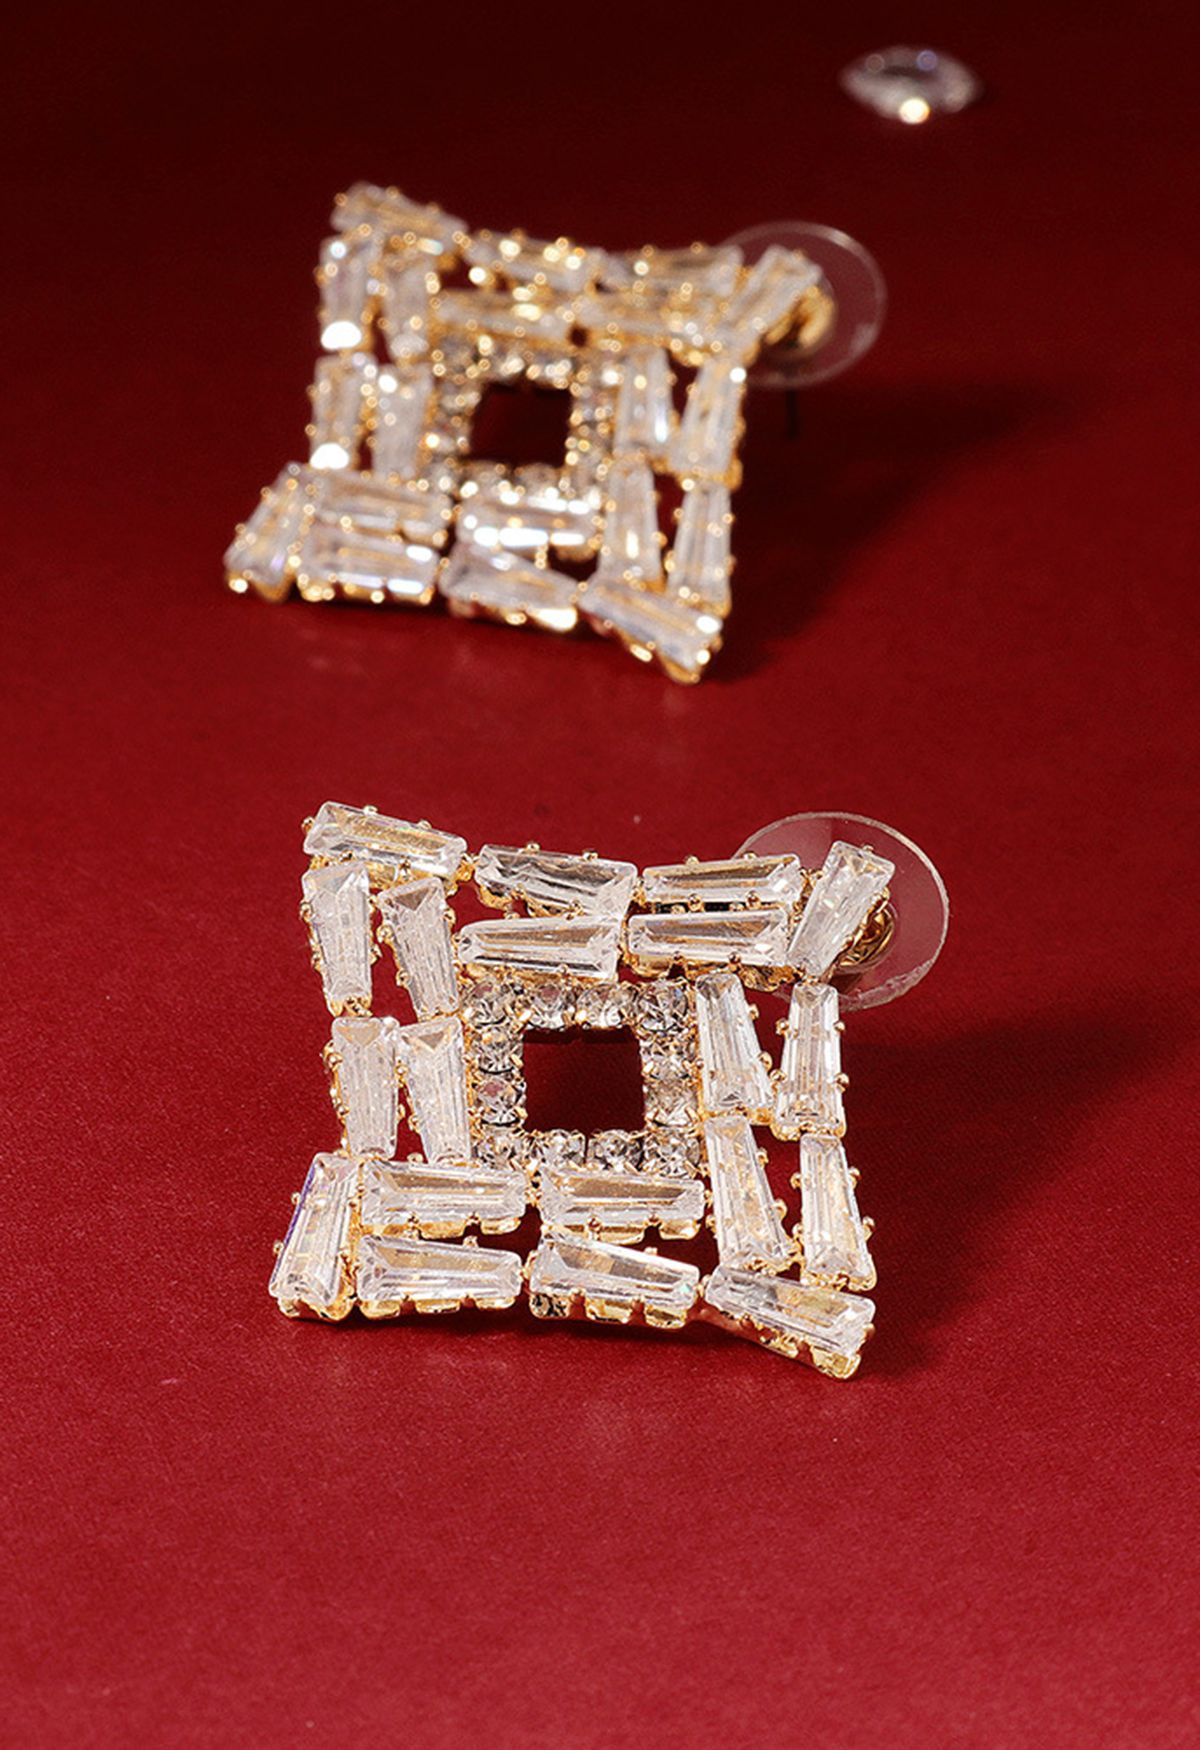 Irregular Hollow Square Shape Diamond Earrings